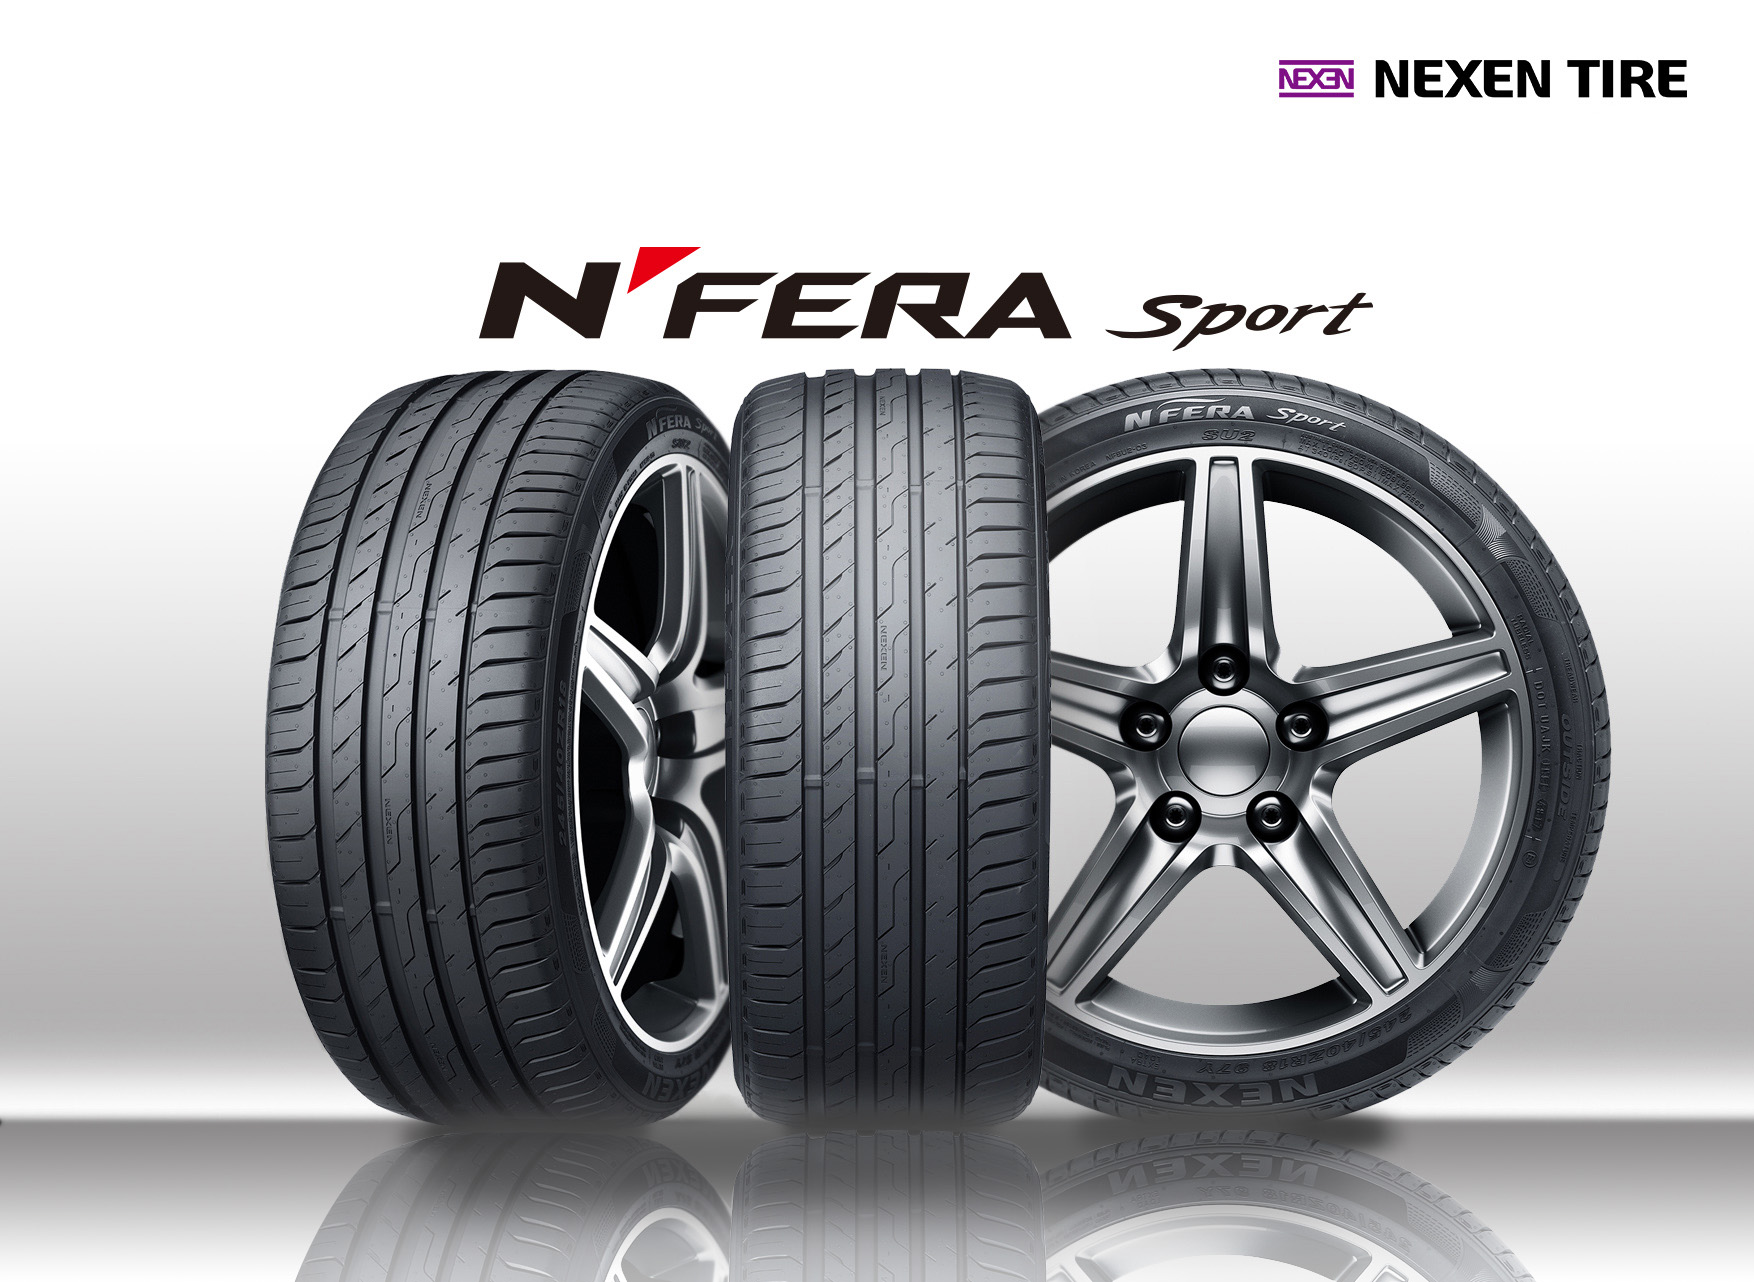 NEXEN Tire expands its original equipment portfolio line for premium quality N'FERA SPORT tires